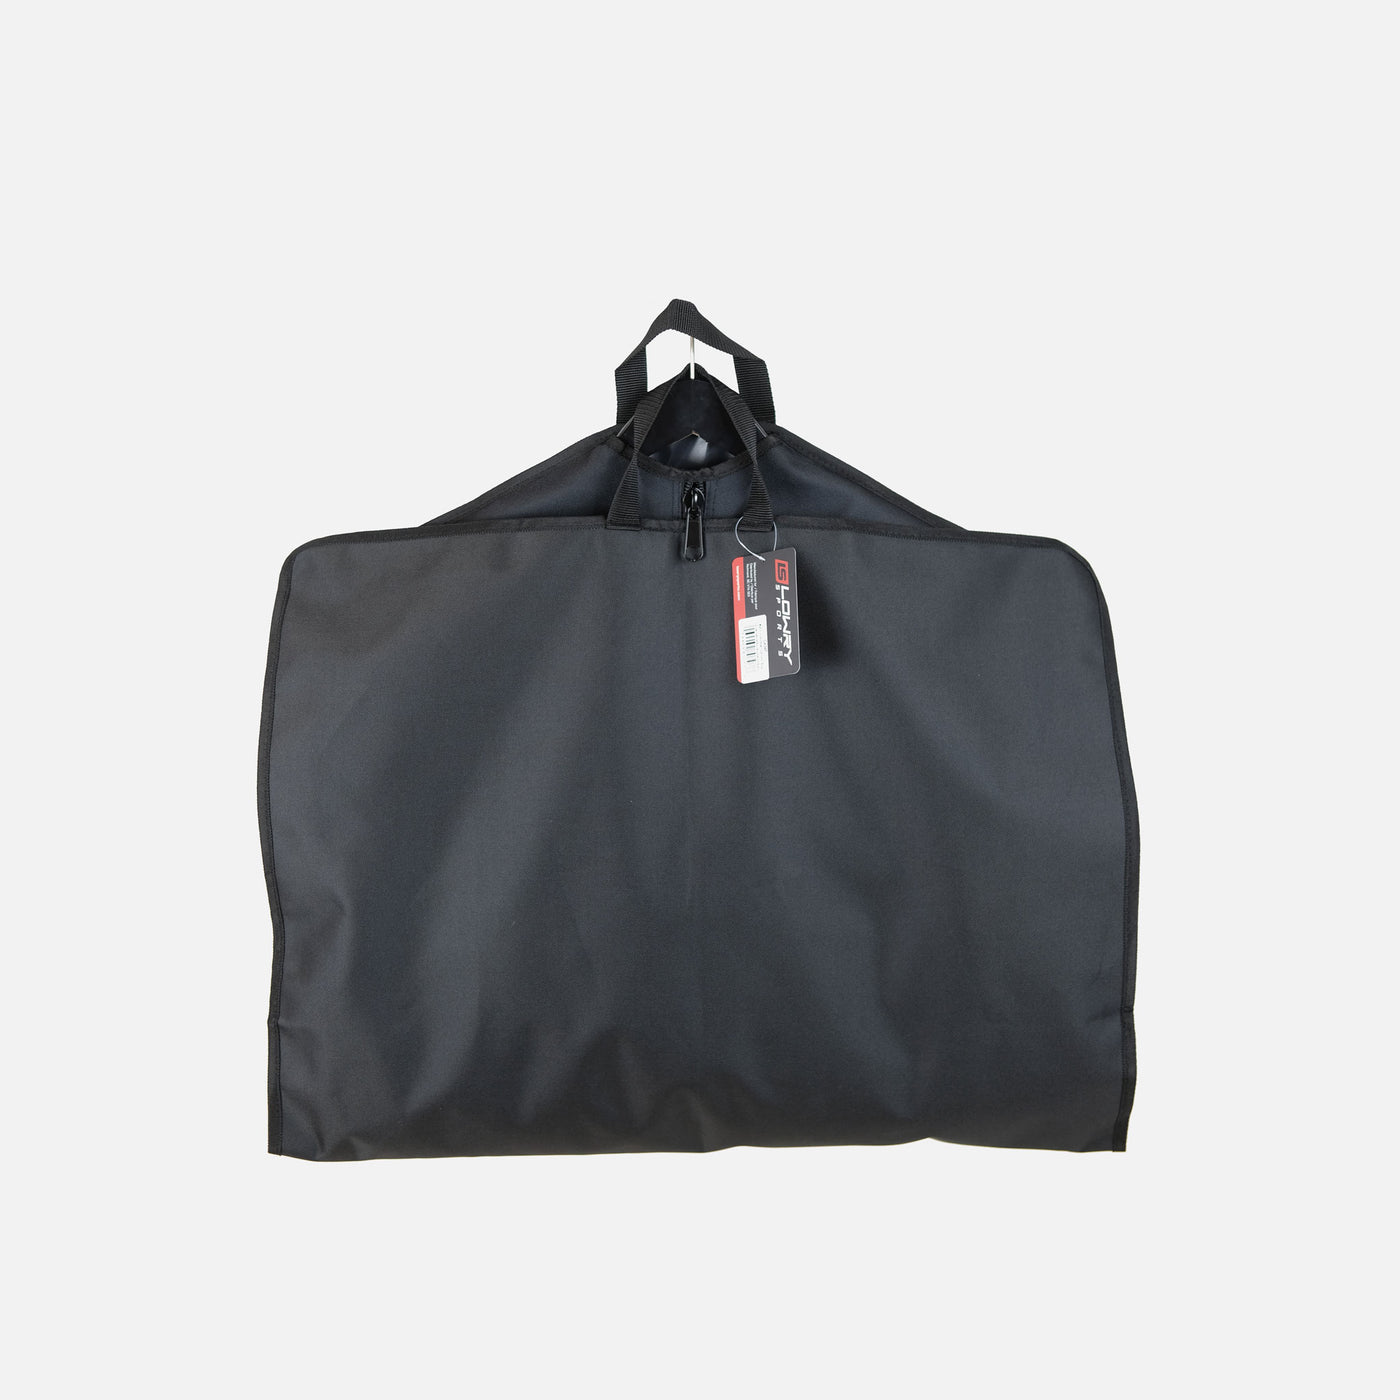 Fraser Valley Hawks -- Lowry's Garment Bag